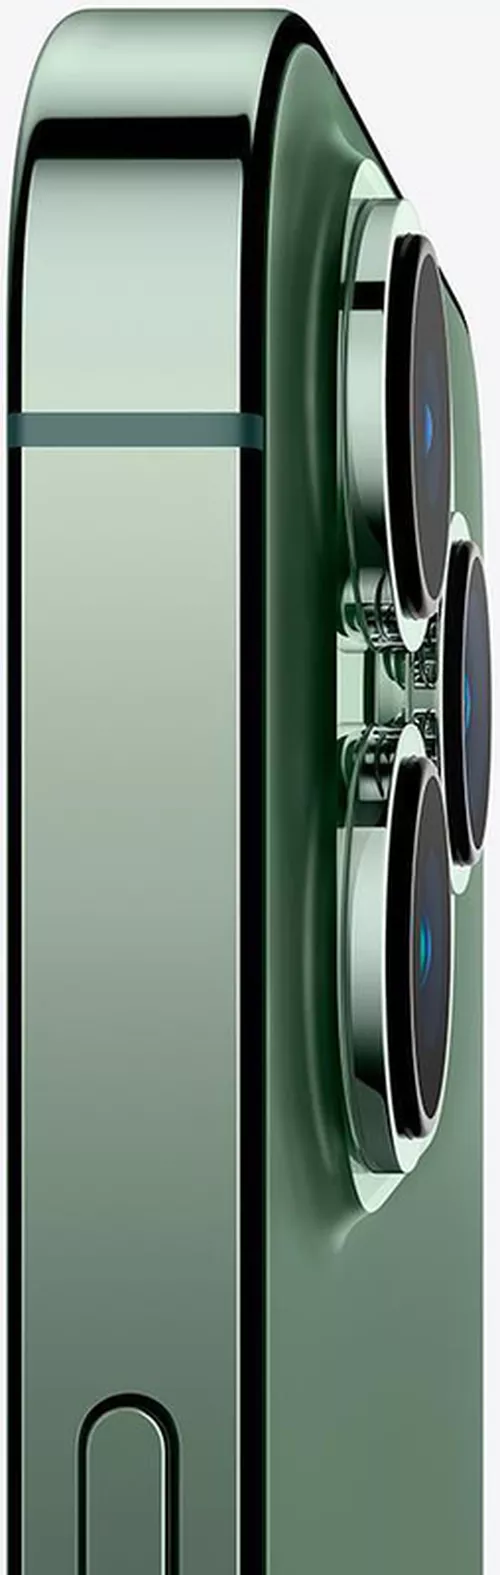 купить Смартфон Apple iPhone 13 Pro Max 256GB Green MND43 в Кишинёве 